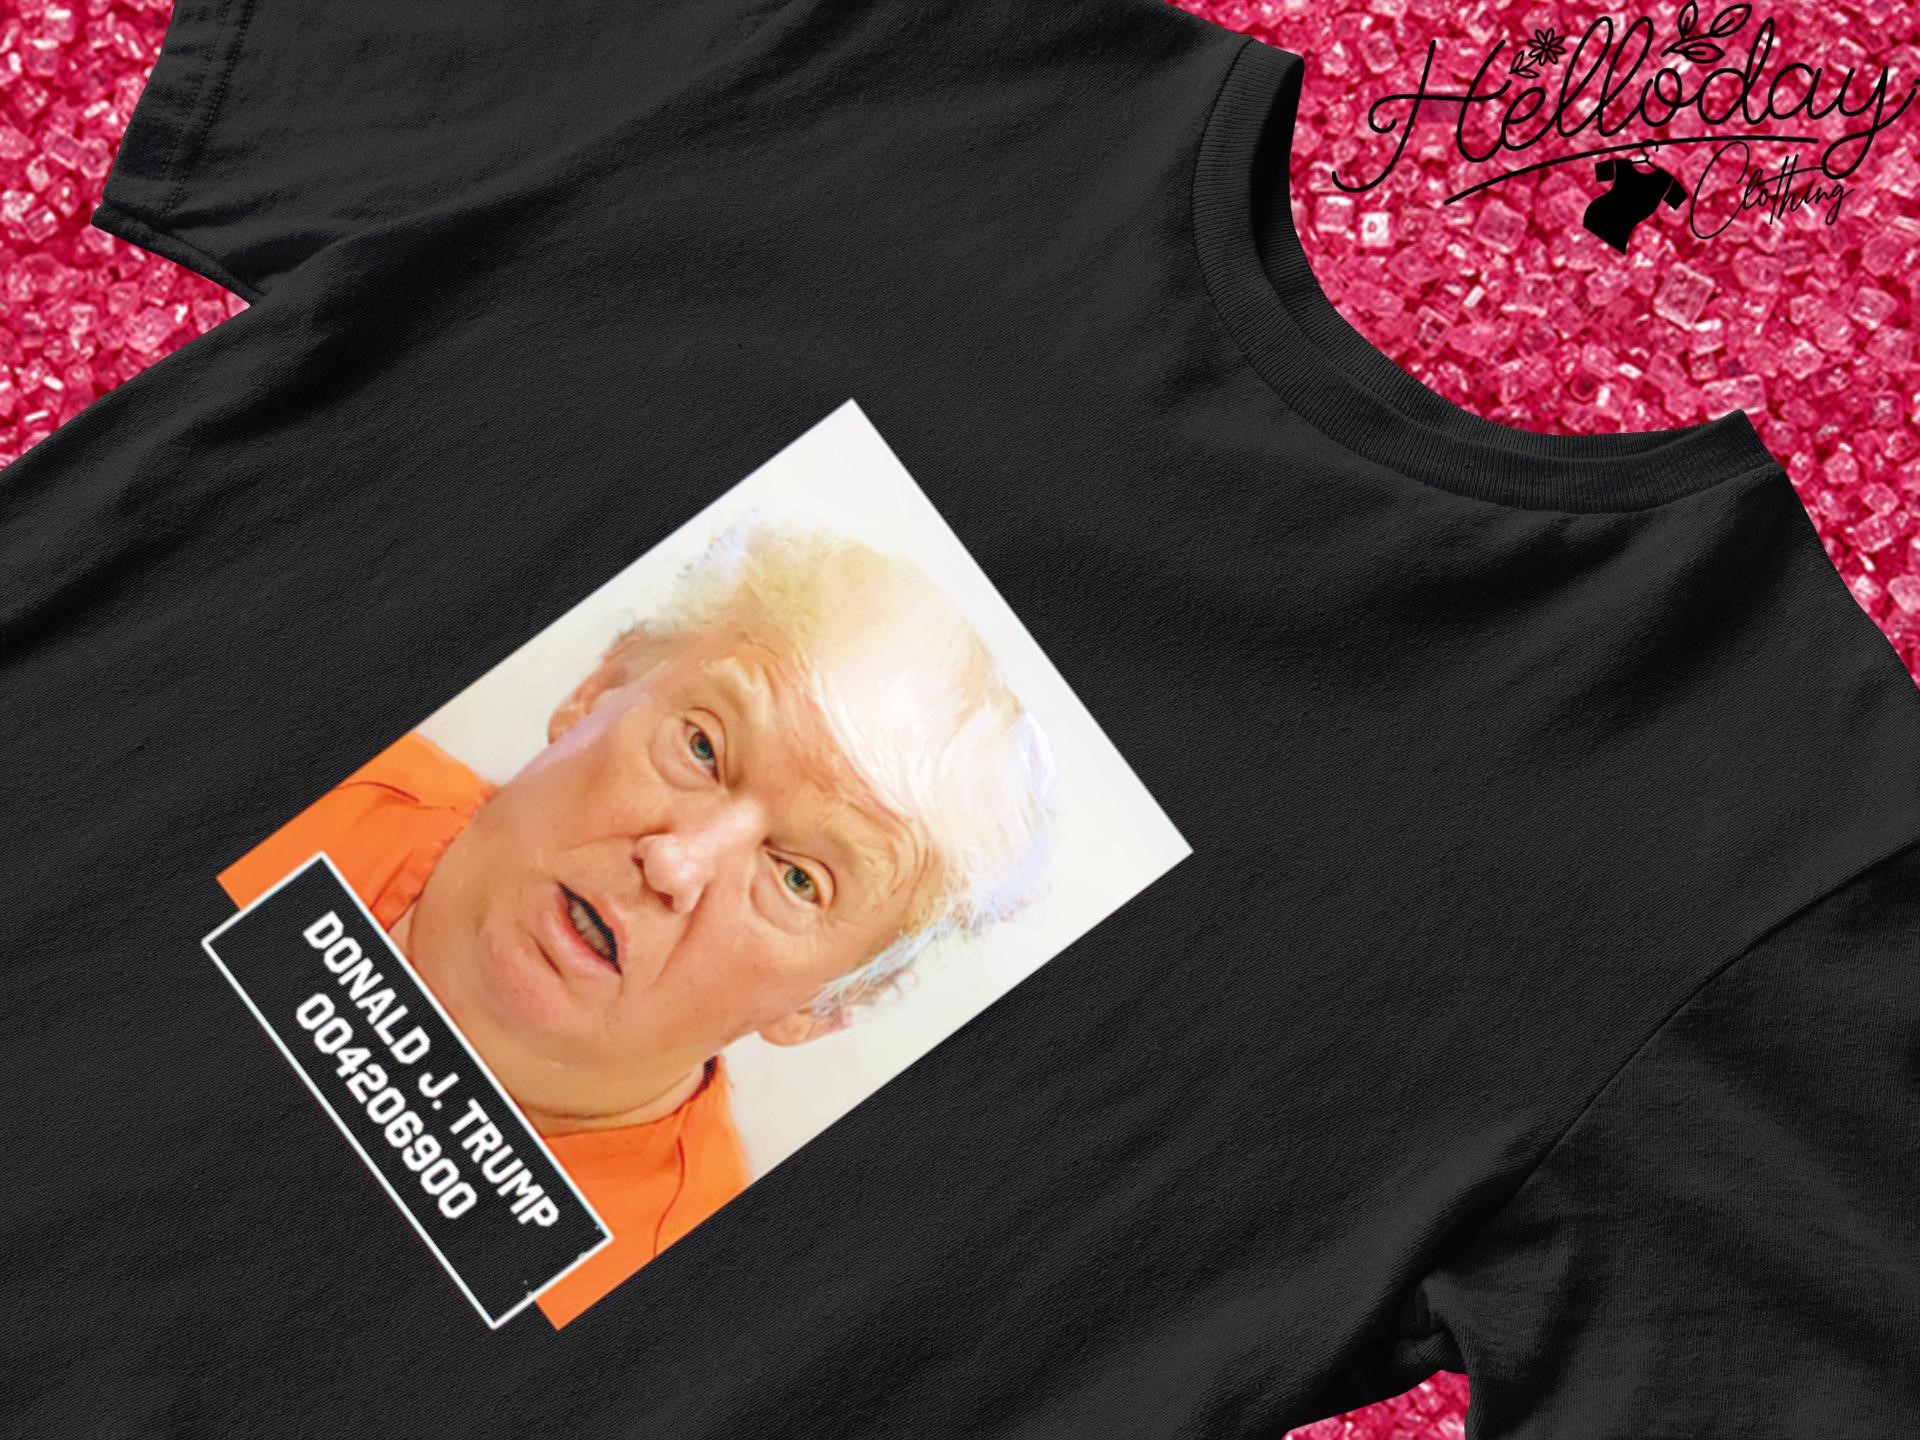 Donald J. Trump Mugshot 2023 shirt